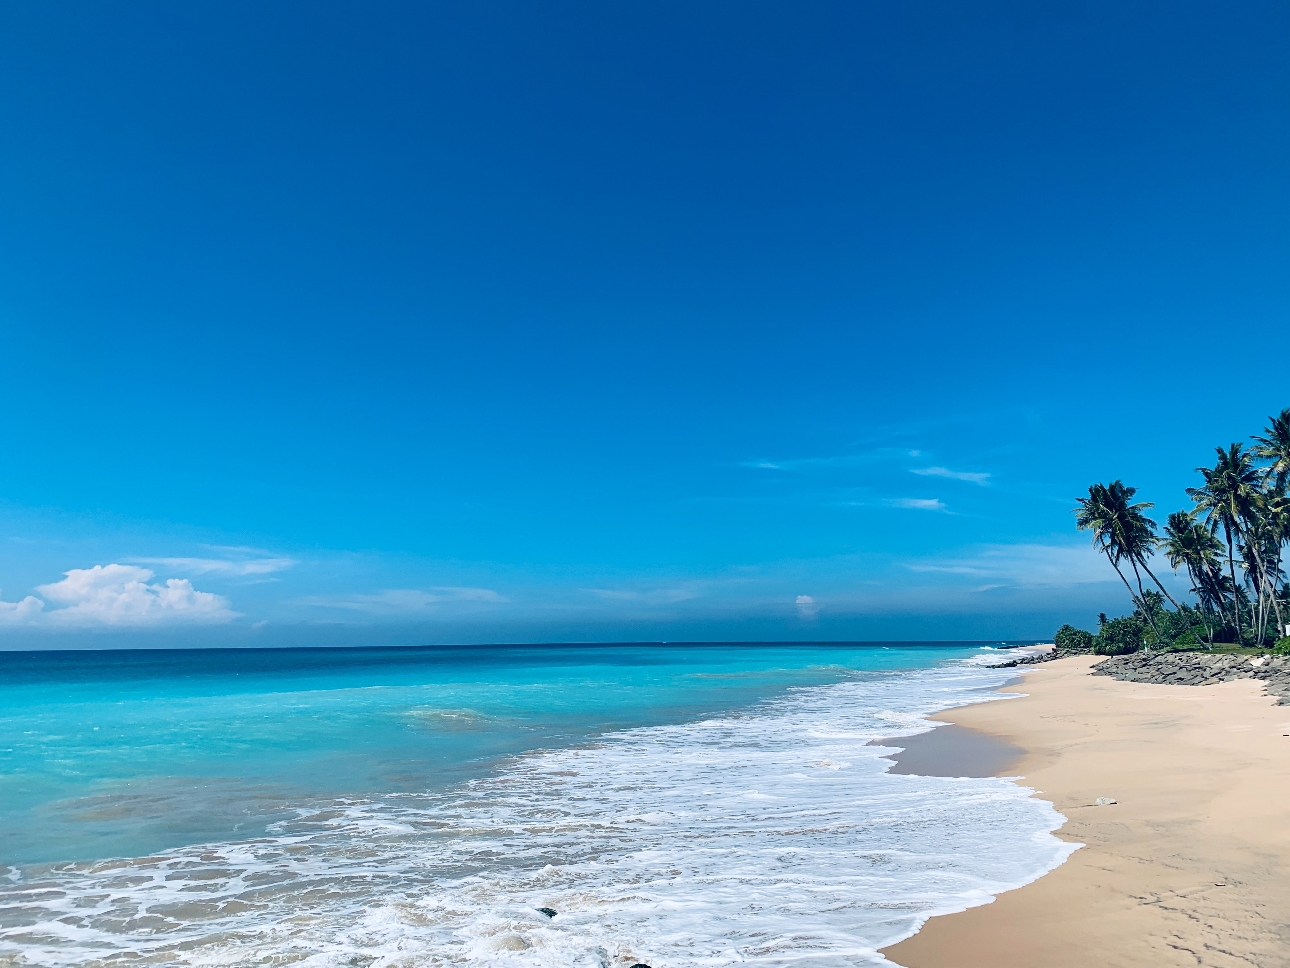 tropical beach blue sky white sand palm tress in view